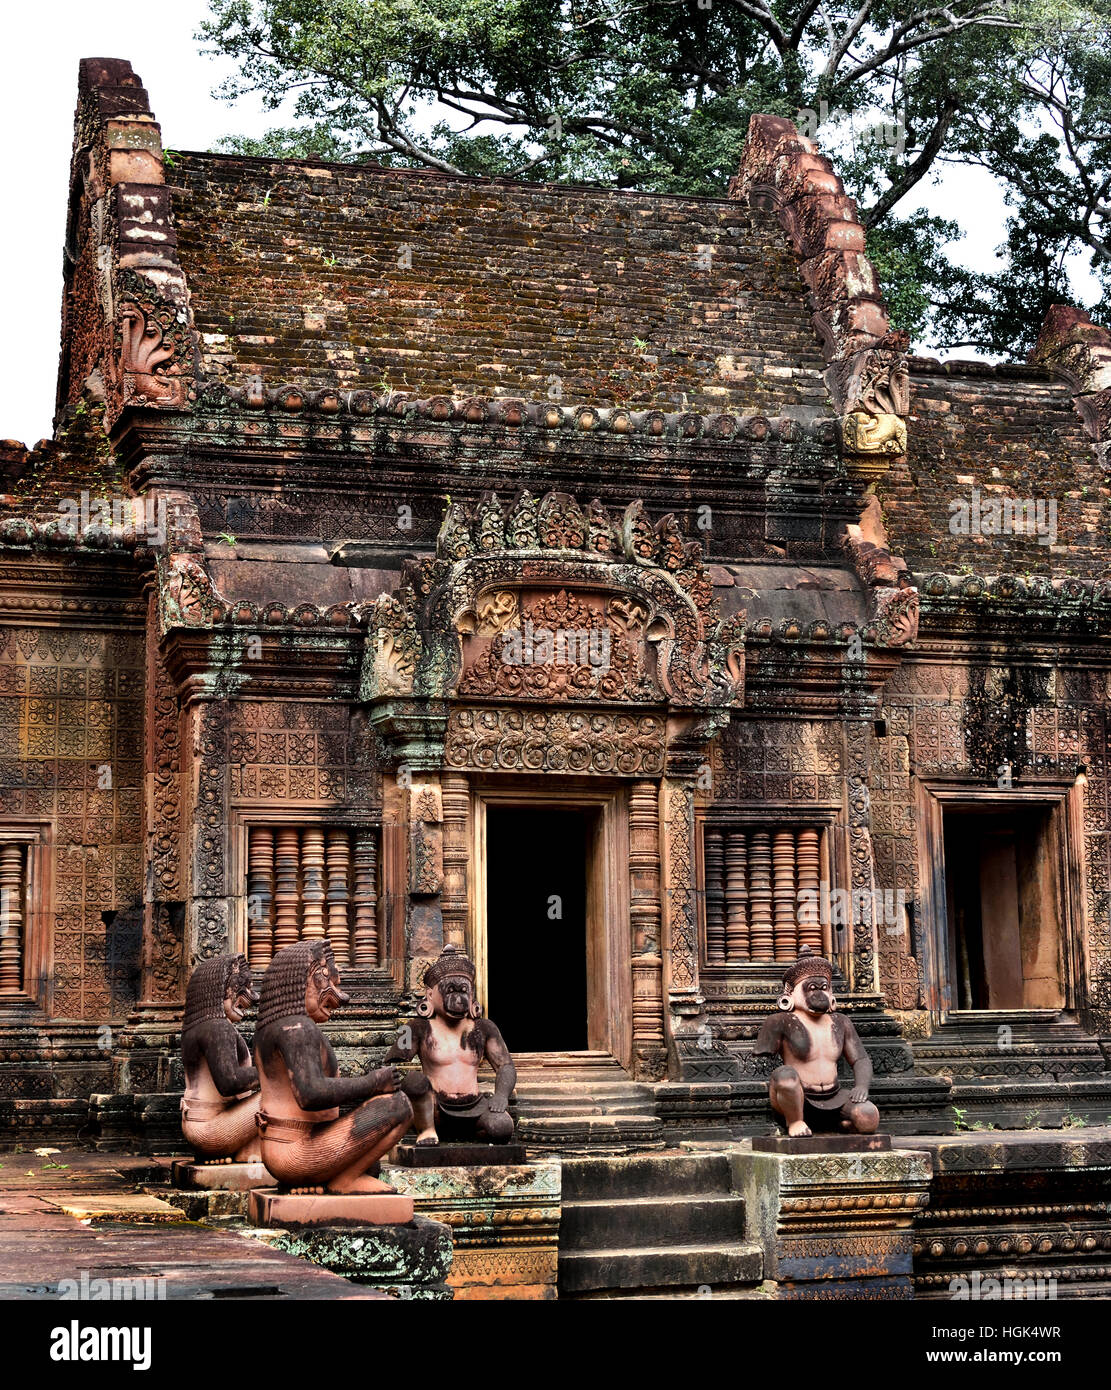 Affen Statuen am Banteay Srei - Srey kambodschanischen Tempel 10. Jahrhundert Hindu-Tempel Shiva geweiht. Siem Reap, Kambodscha (Angkor Komplex verschiedene archäologische Hauptstädte Khmer Reich 9-15. Jahrhundert) Stockfoto